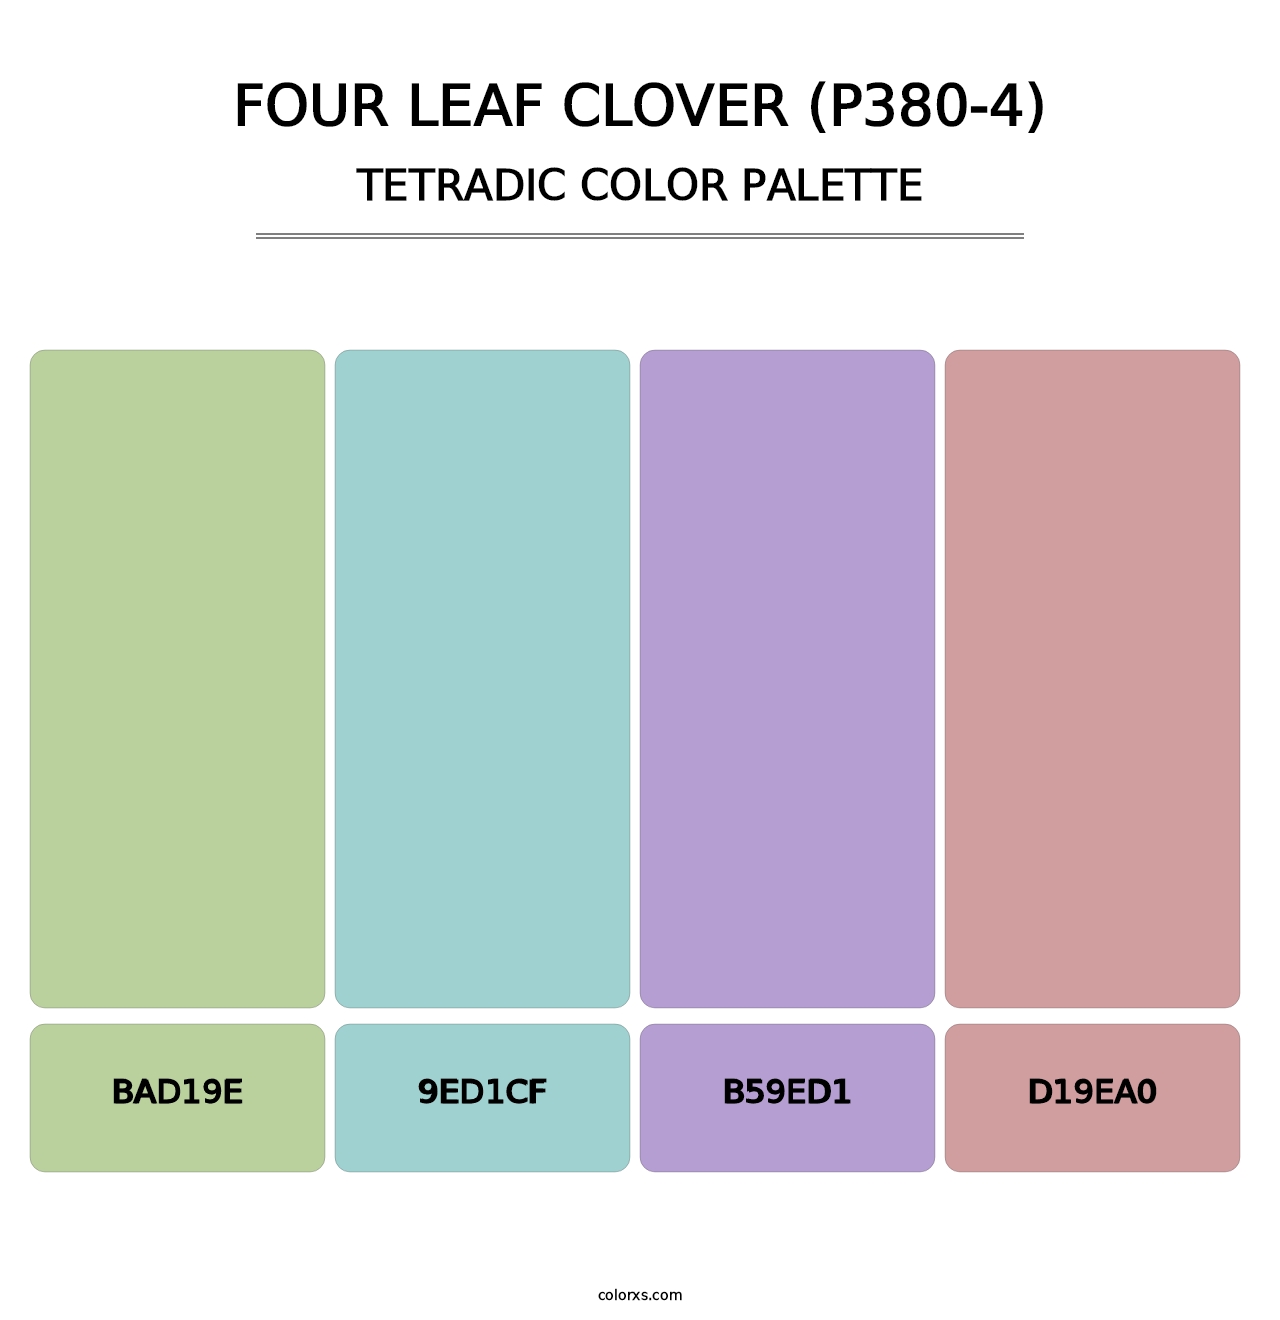 Four Leaf Clover (P380-4) - Tetradic Color Palette